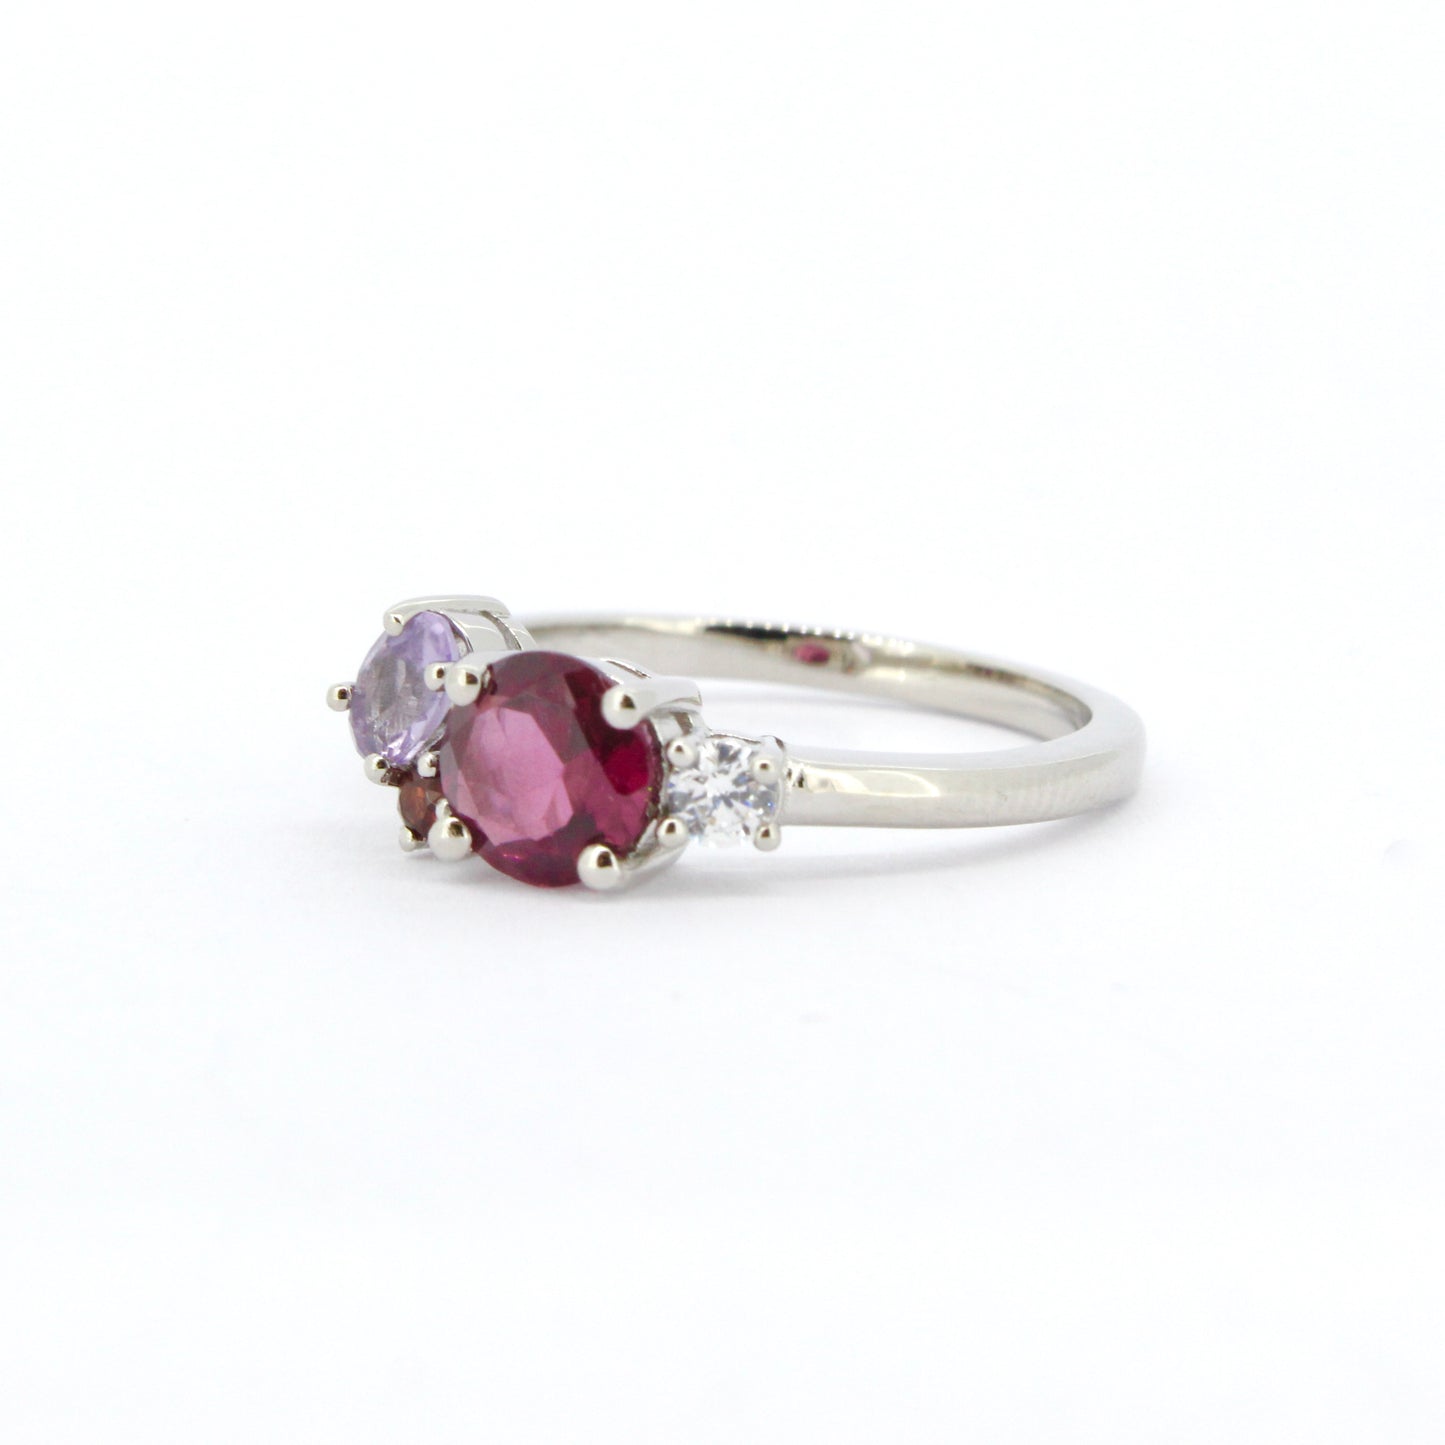 Garnet, Pink Amethyst and Cubic Zirconia Ring